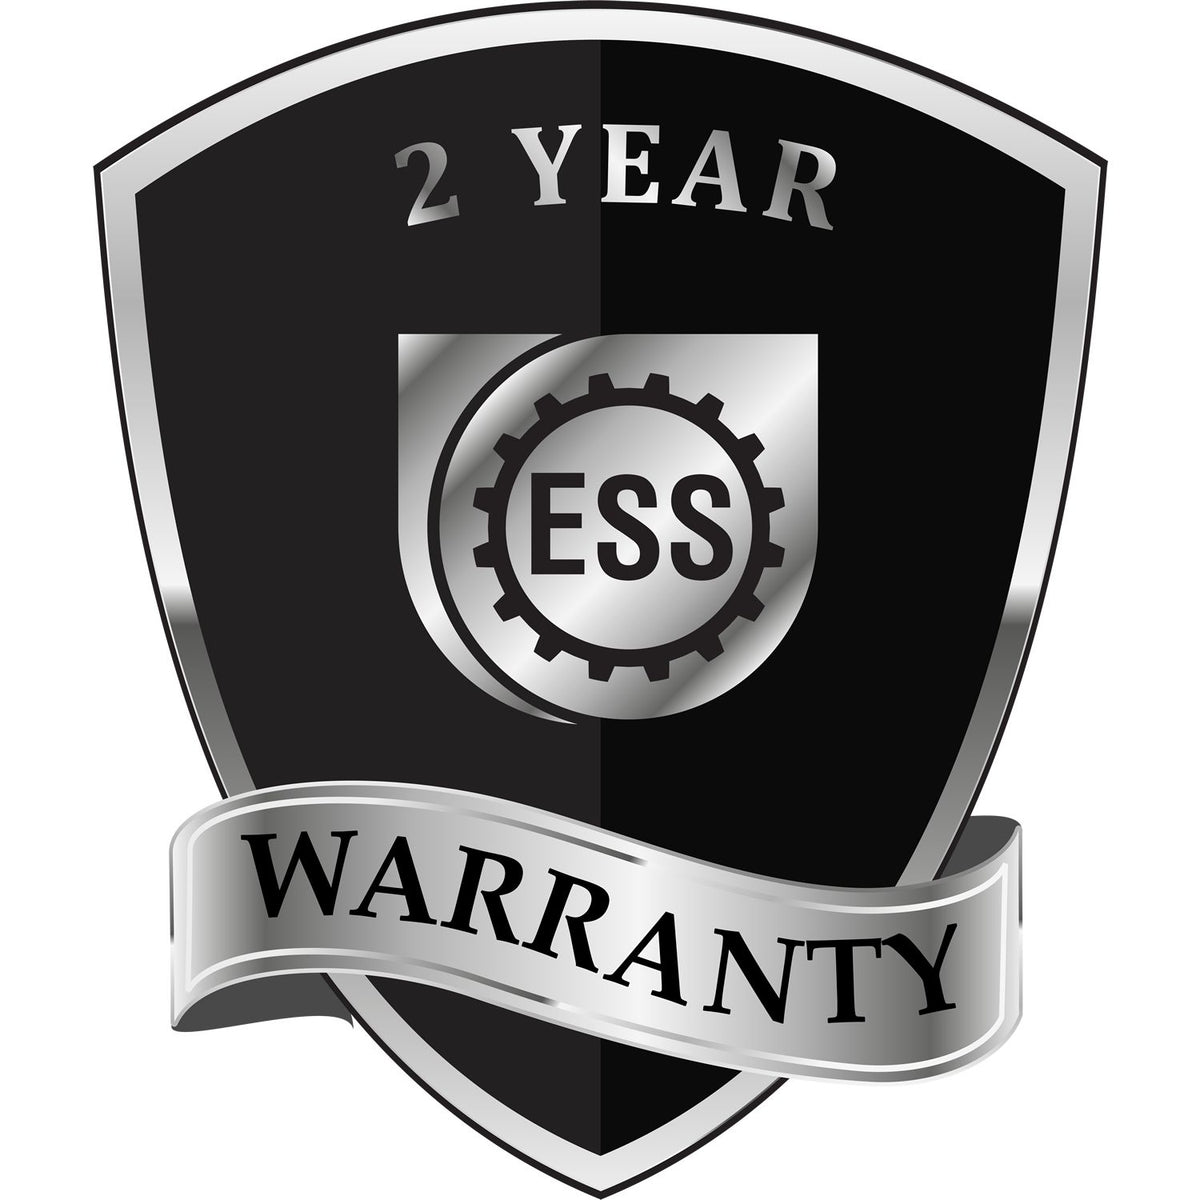 A black and silver badge or emblem showing warranty information for the Hybrid Rhode Island Land Surveyor Seal